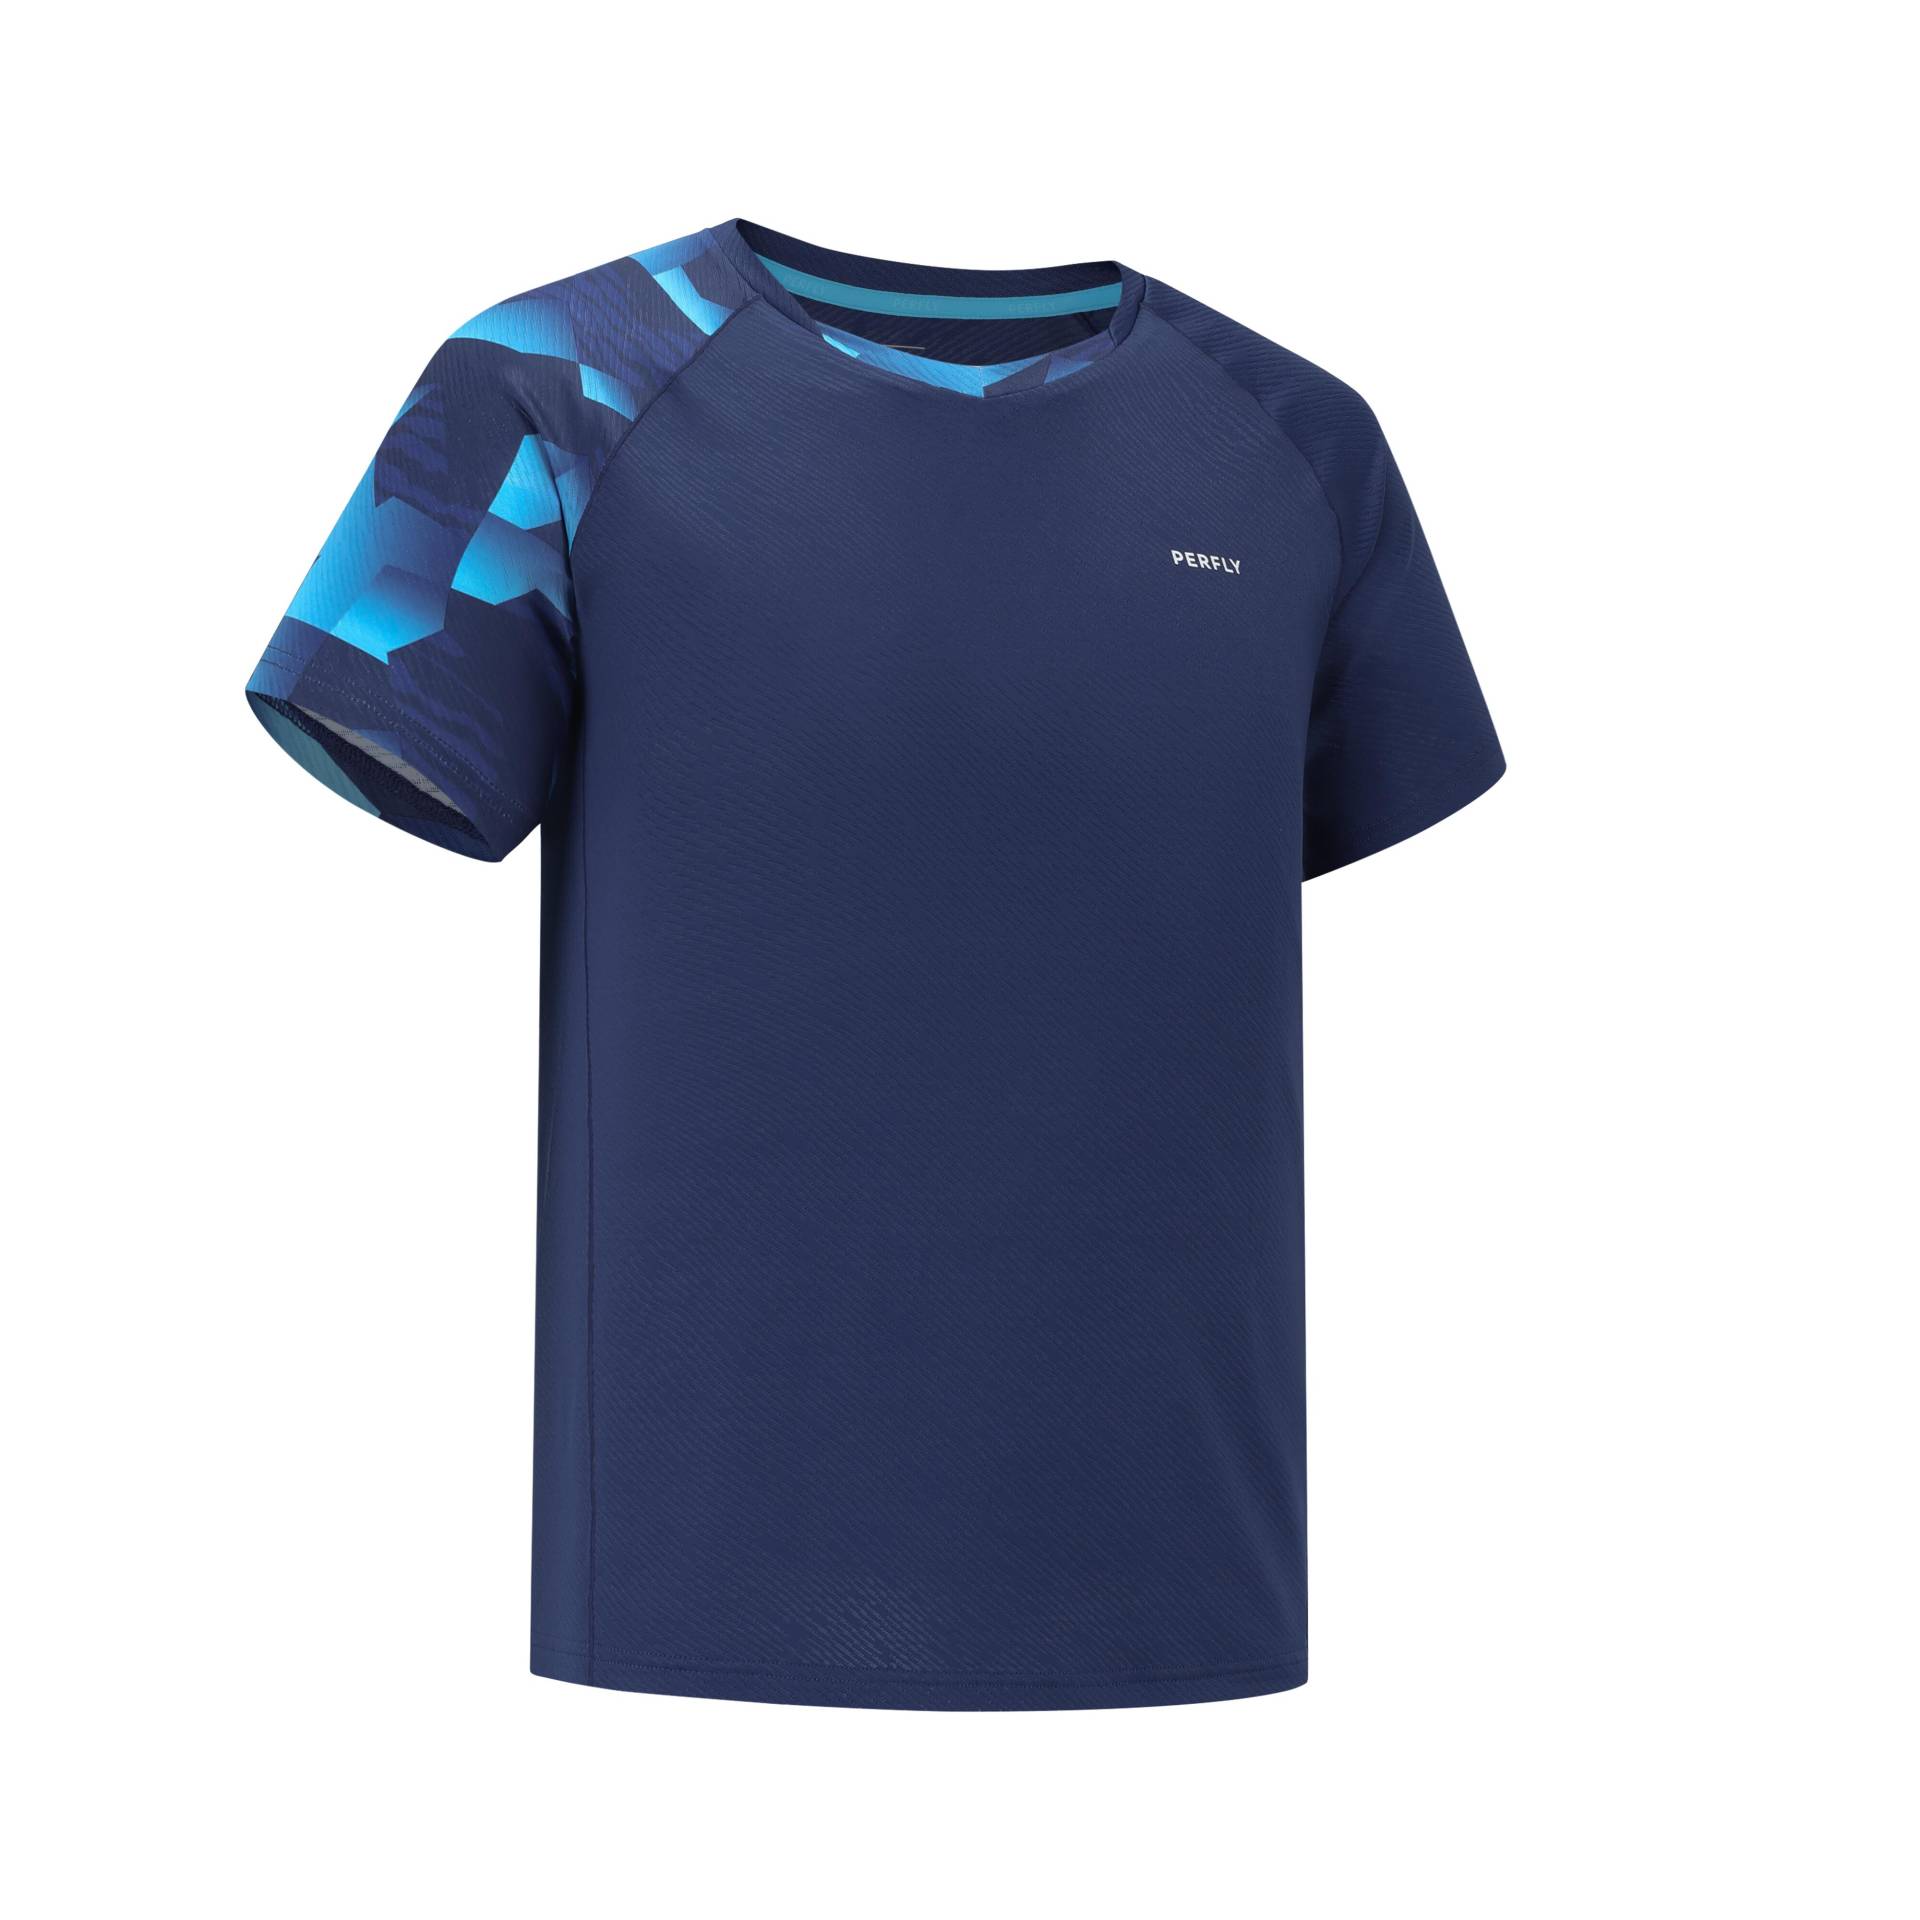 Herren Badminton T-Shirt - 560 Lite navy/aqua von PERFLY